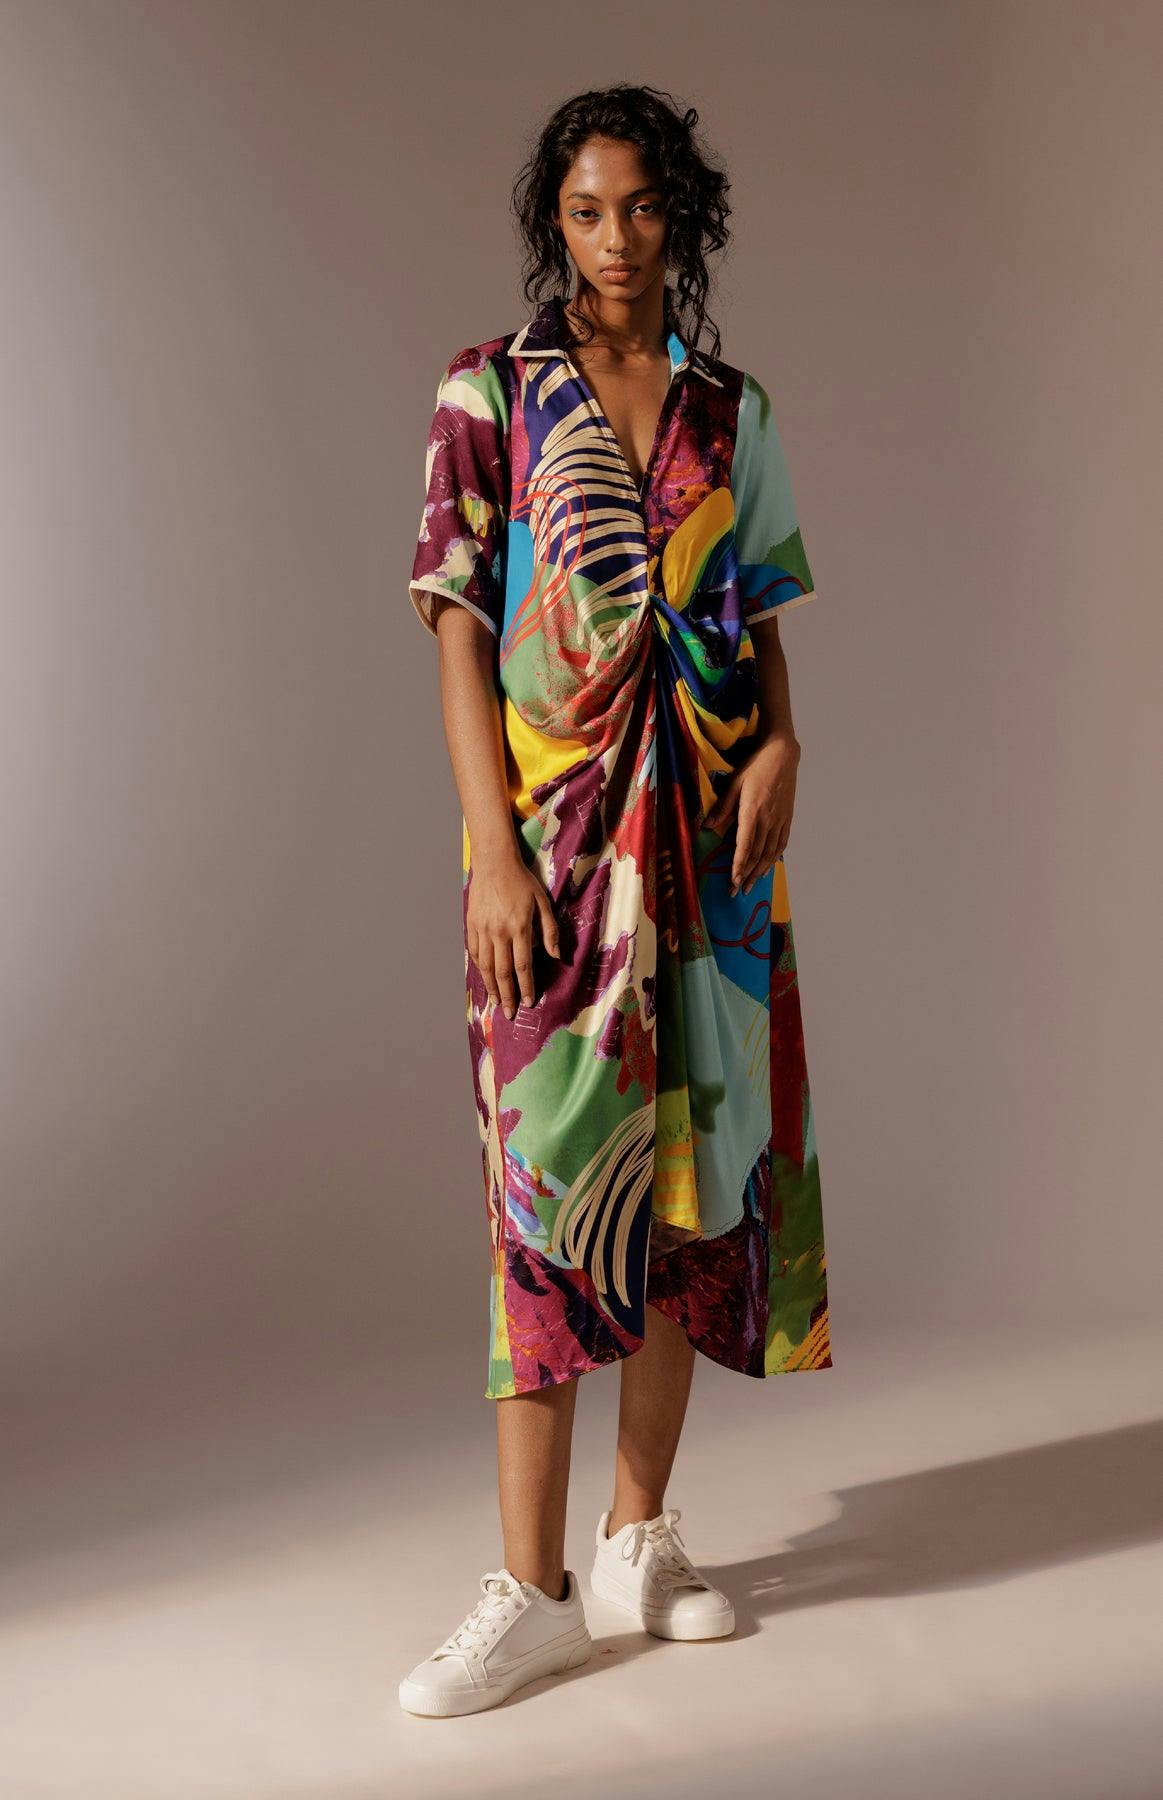 Calypso Draped Shirt Dress, a product by Advait India